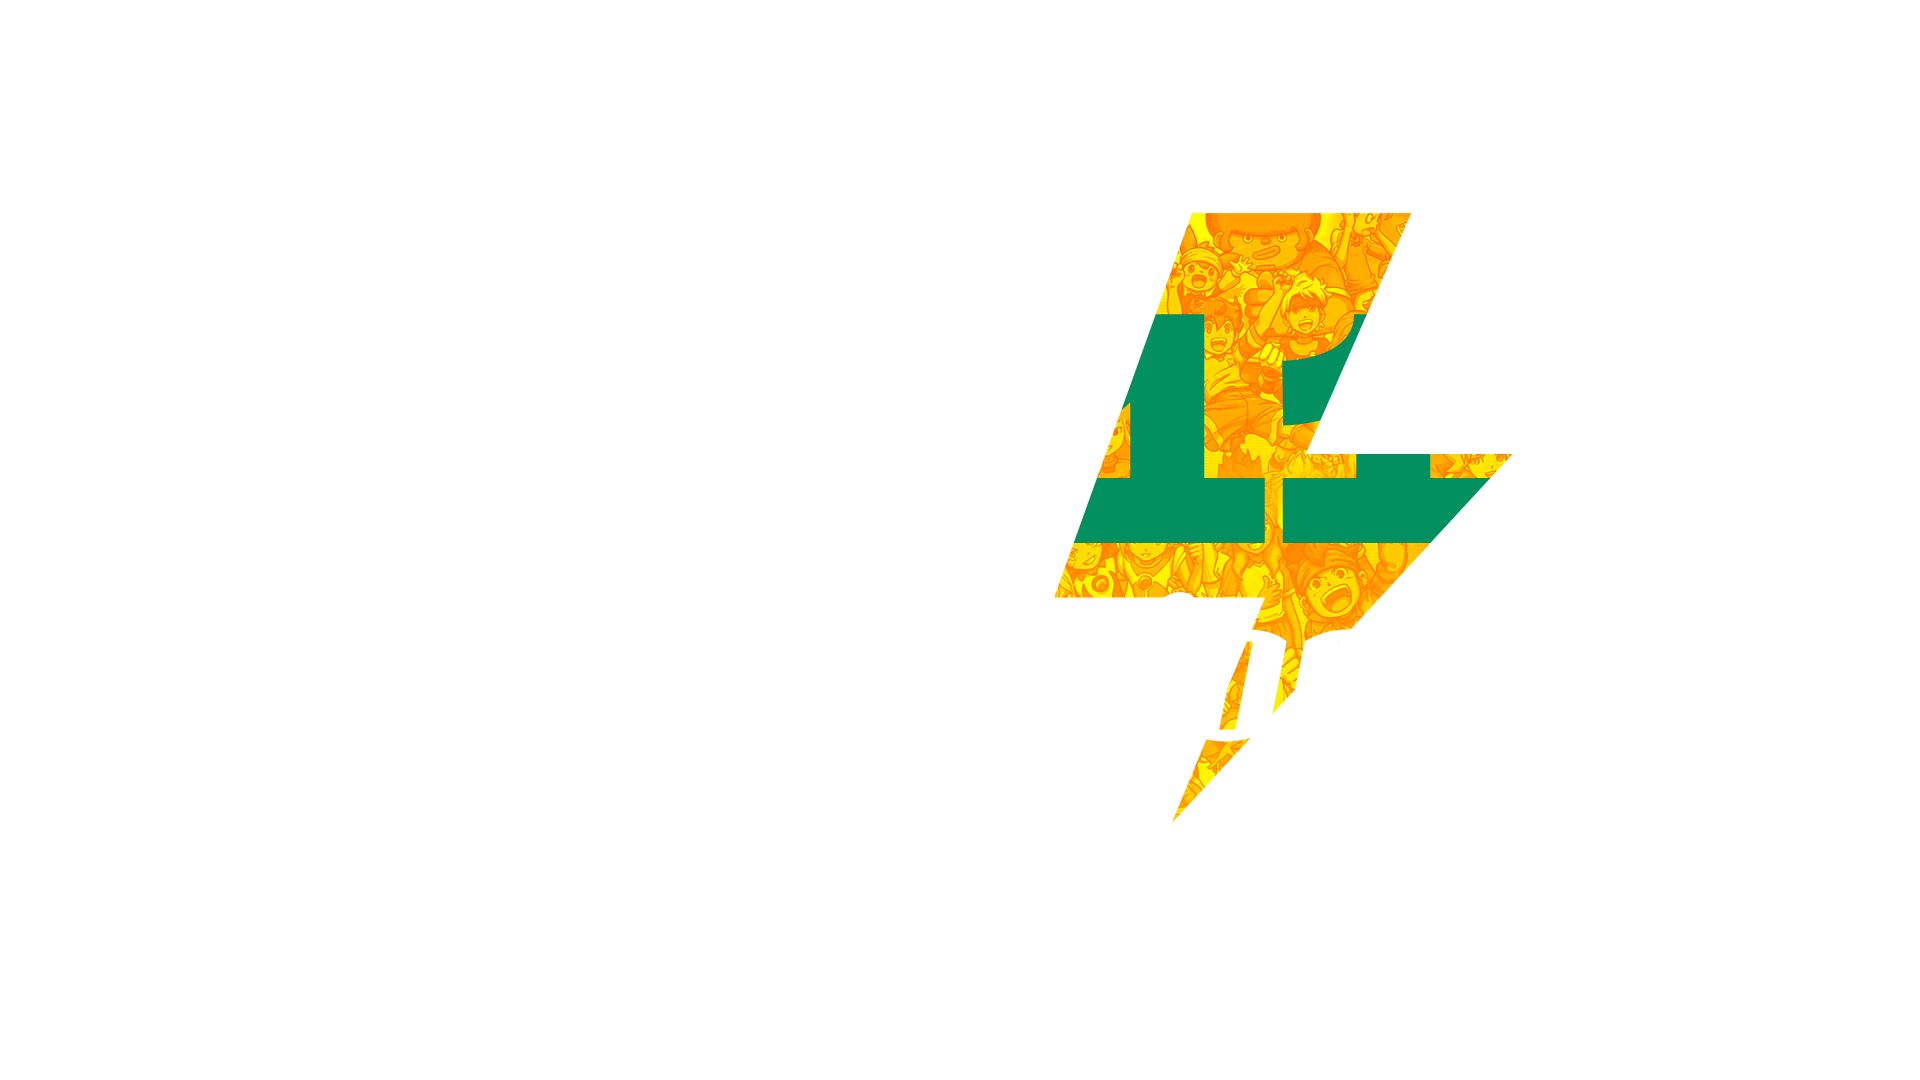 Ina11 Translations